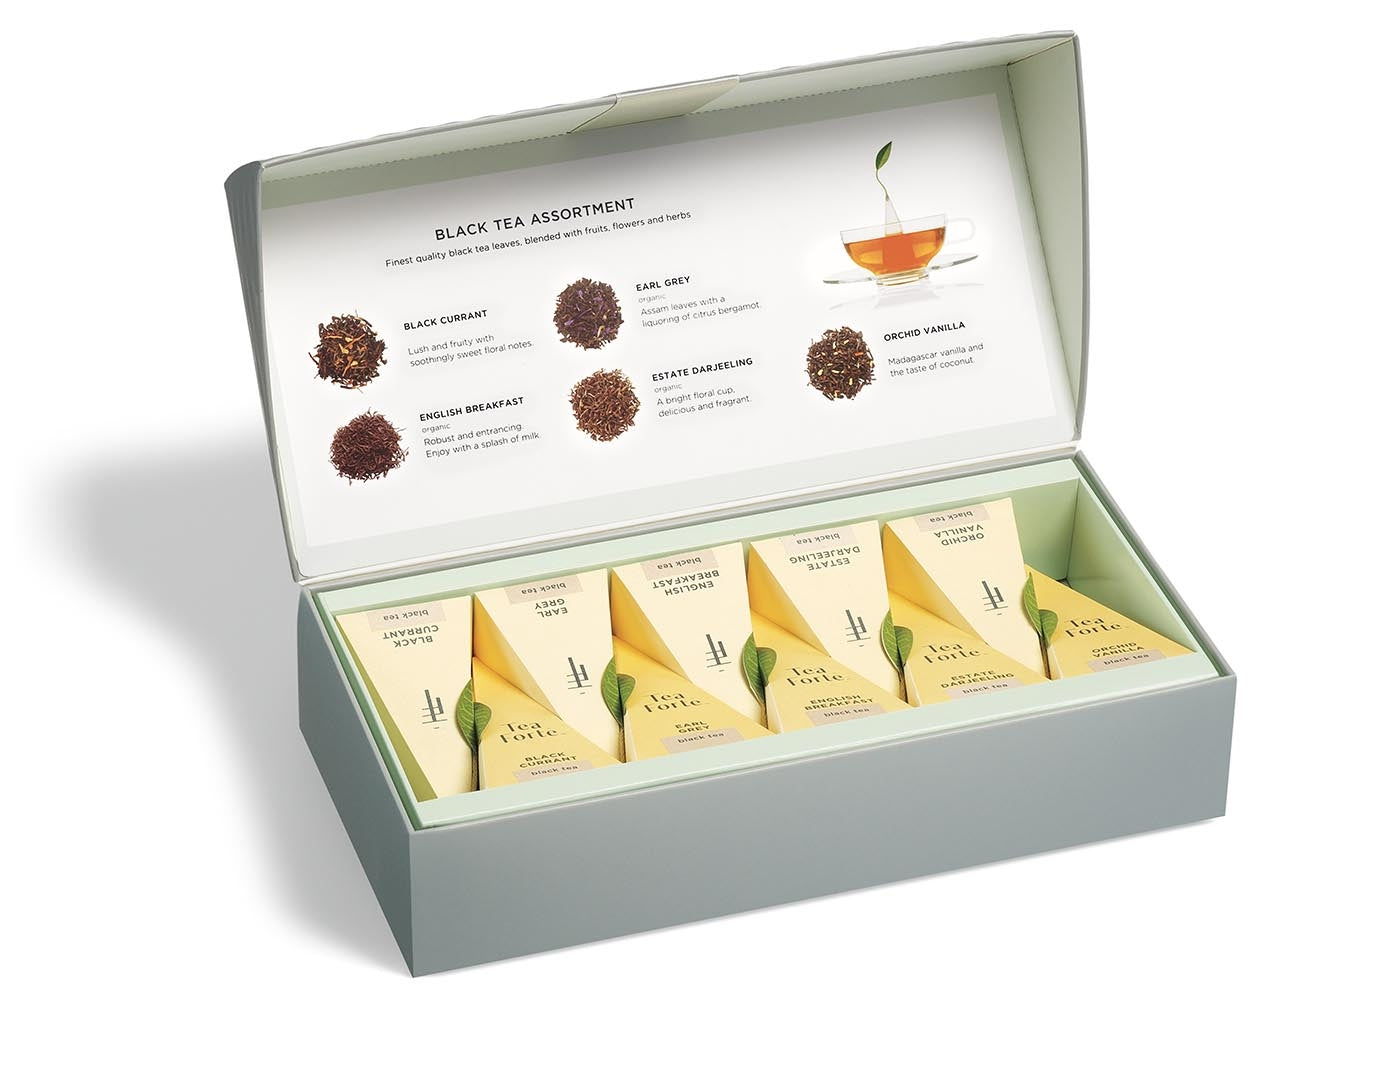 Black Tea tea assortment in a 10 count petite presentation box with lid open